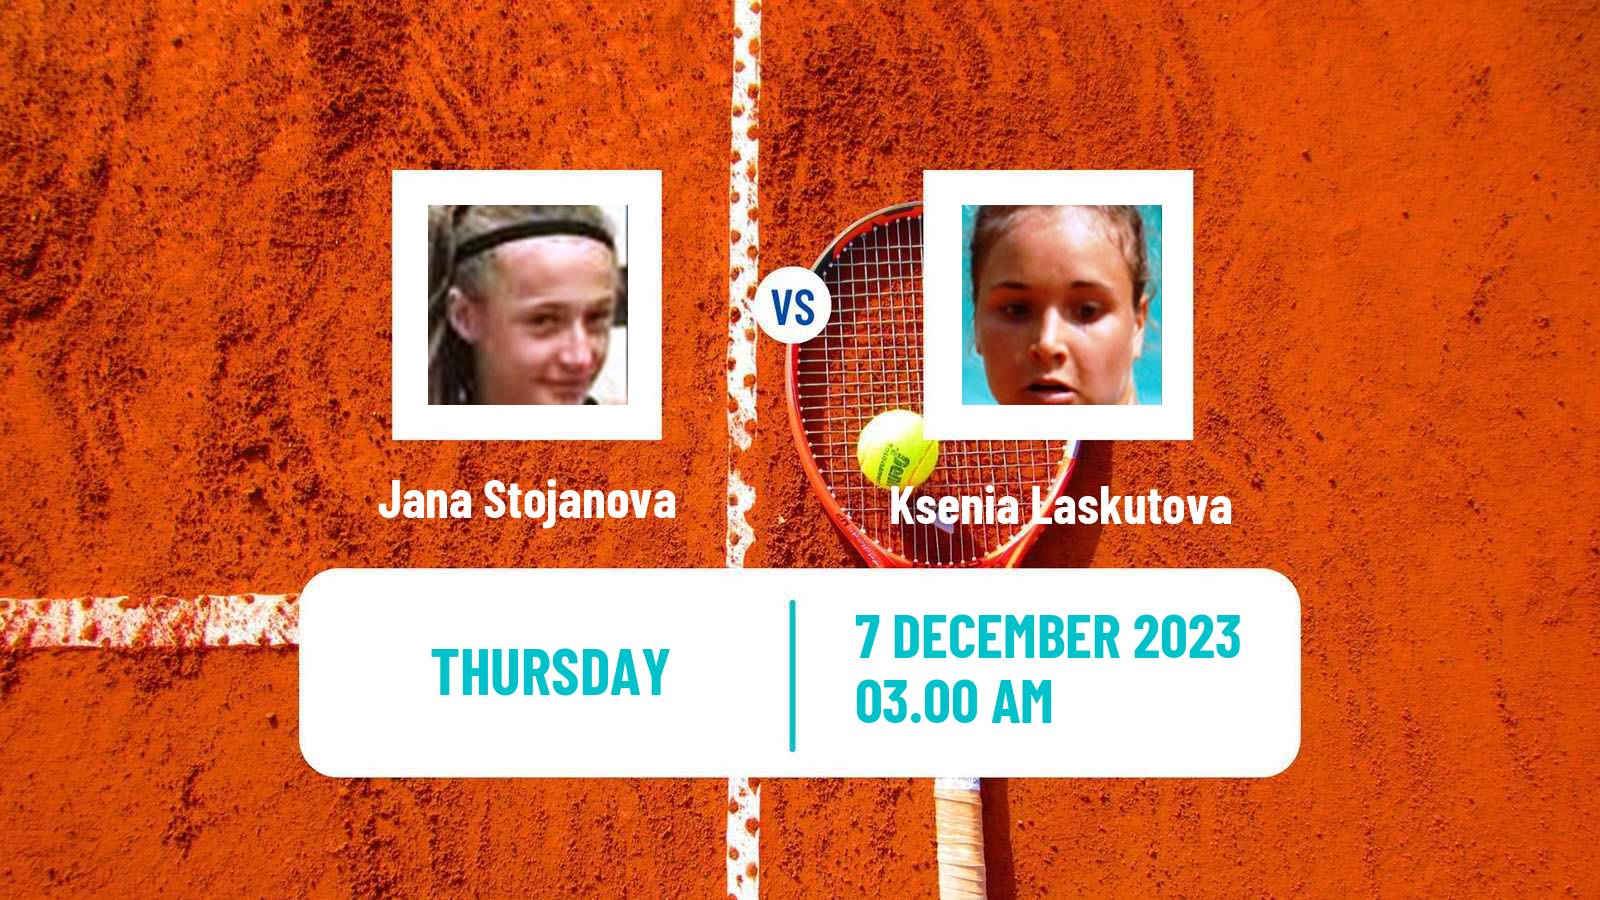 Tennis ITF W15 Antalya 21 Women Jana Stojanova - Ksenia Laskutova